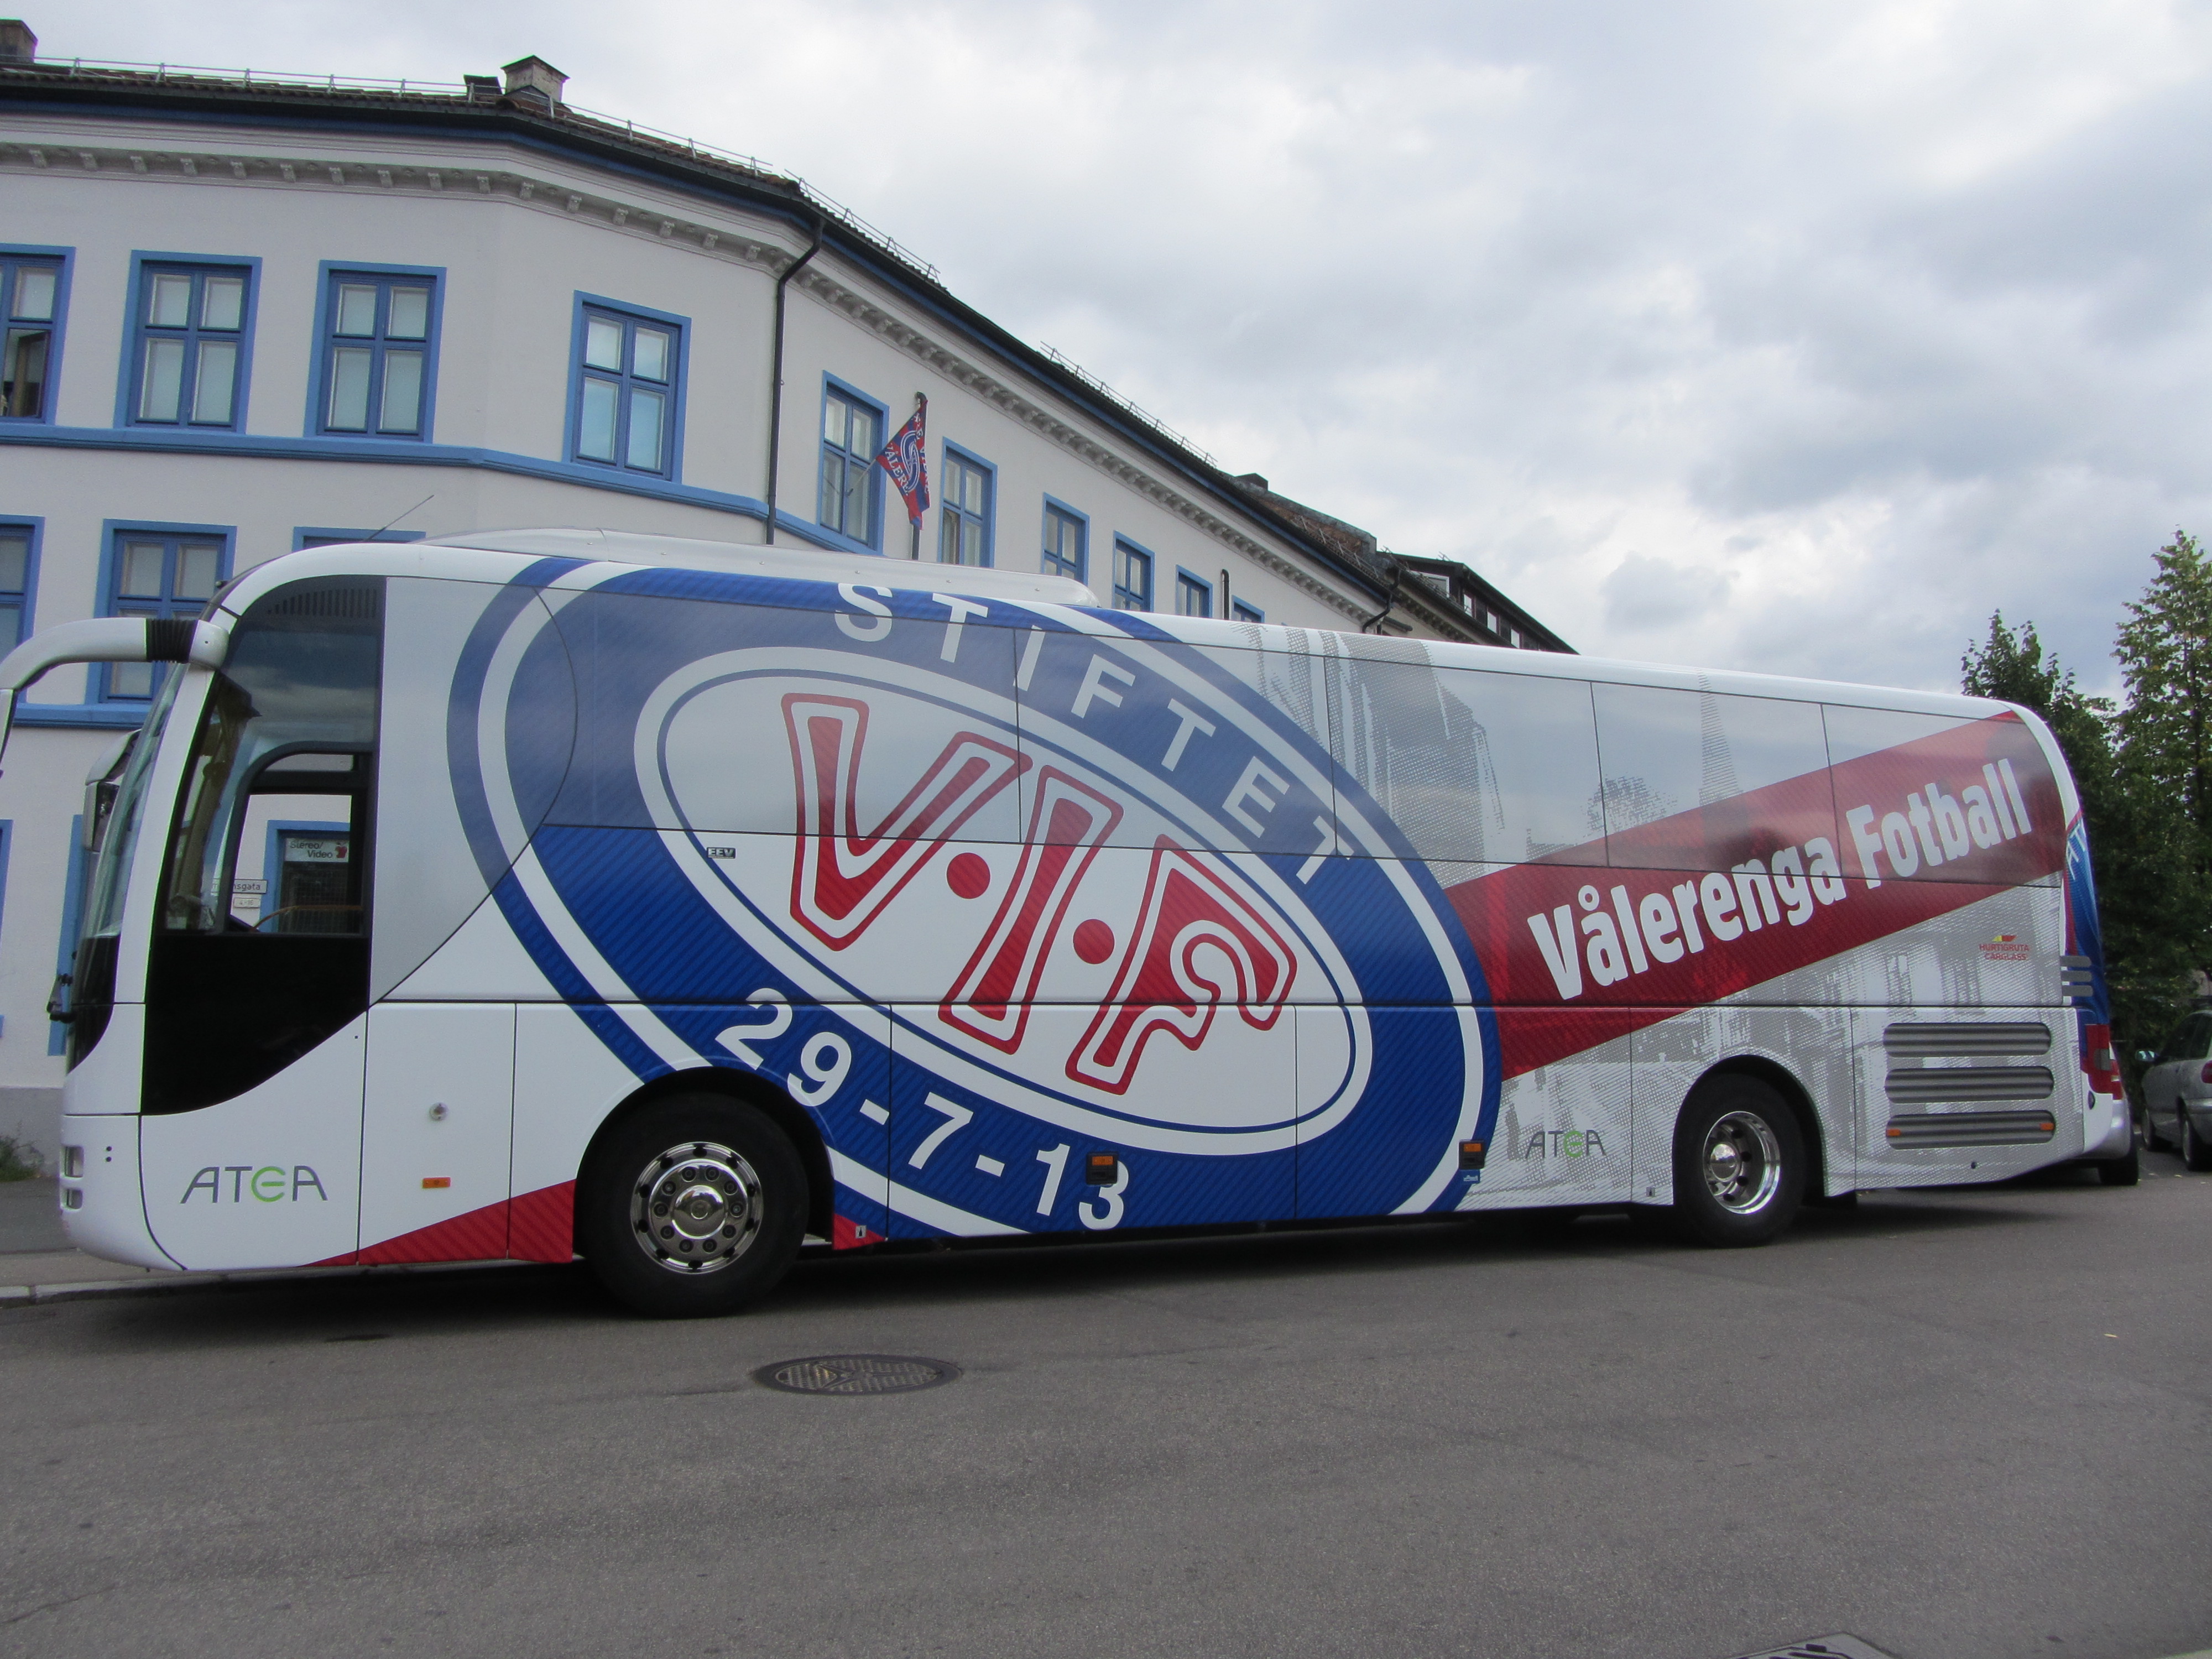 Vålerenga Fotballs buss var  med i toget. Foto: Espen Harås Luthman